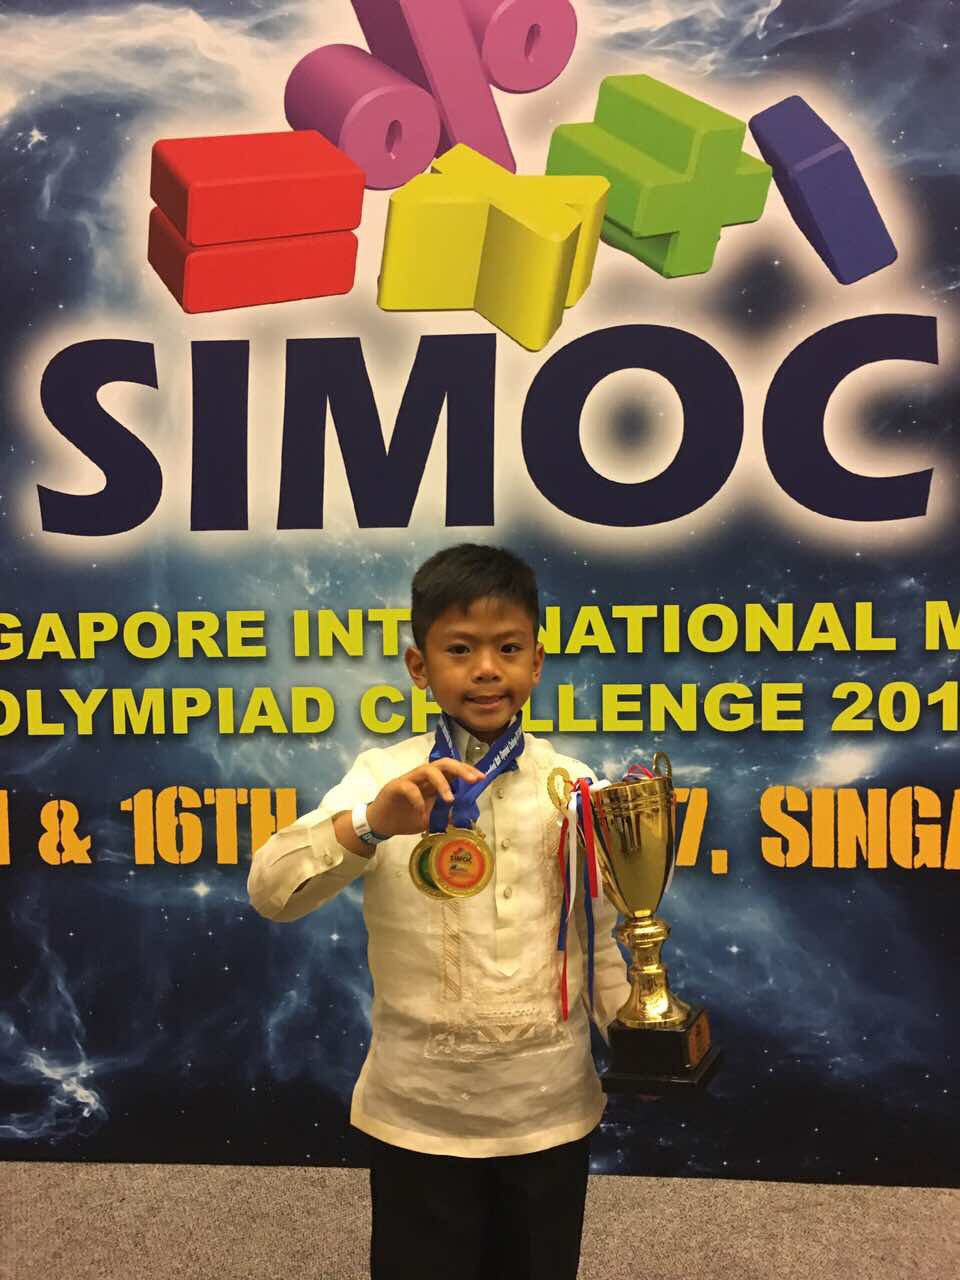 Filipino whiz kids reap awards in Singapore Math Olympiad